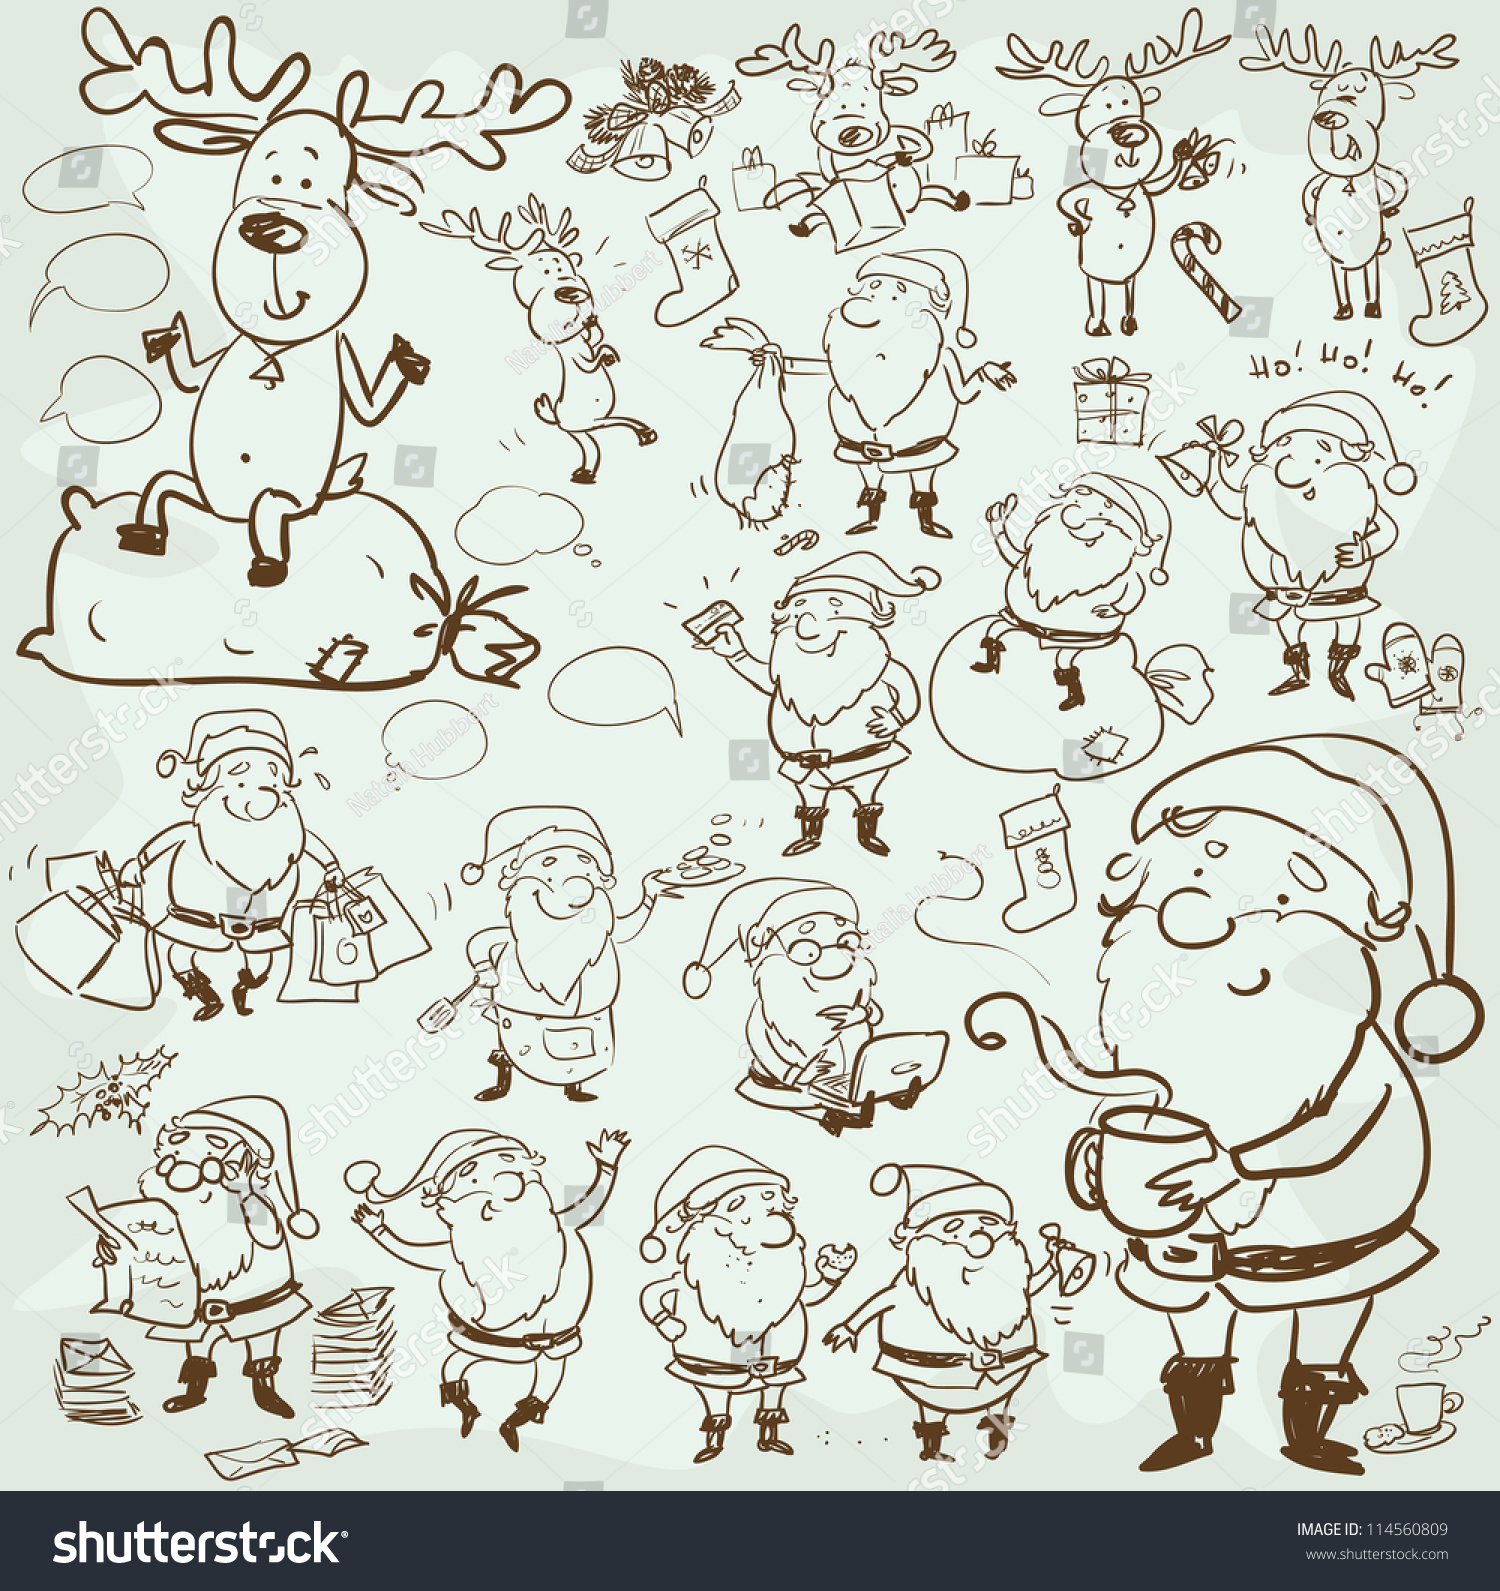 Hand drawn Christmas characters and elements cartoon Santa and Rudolf sketch